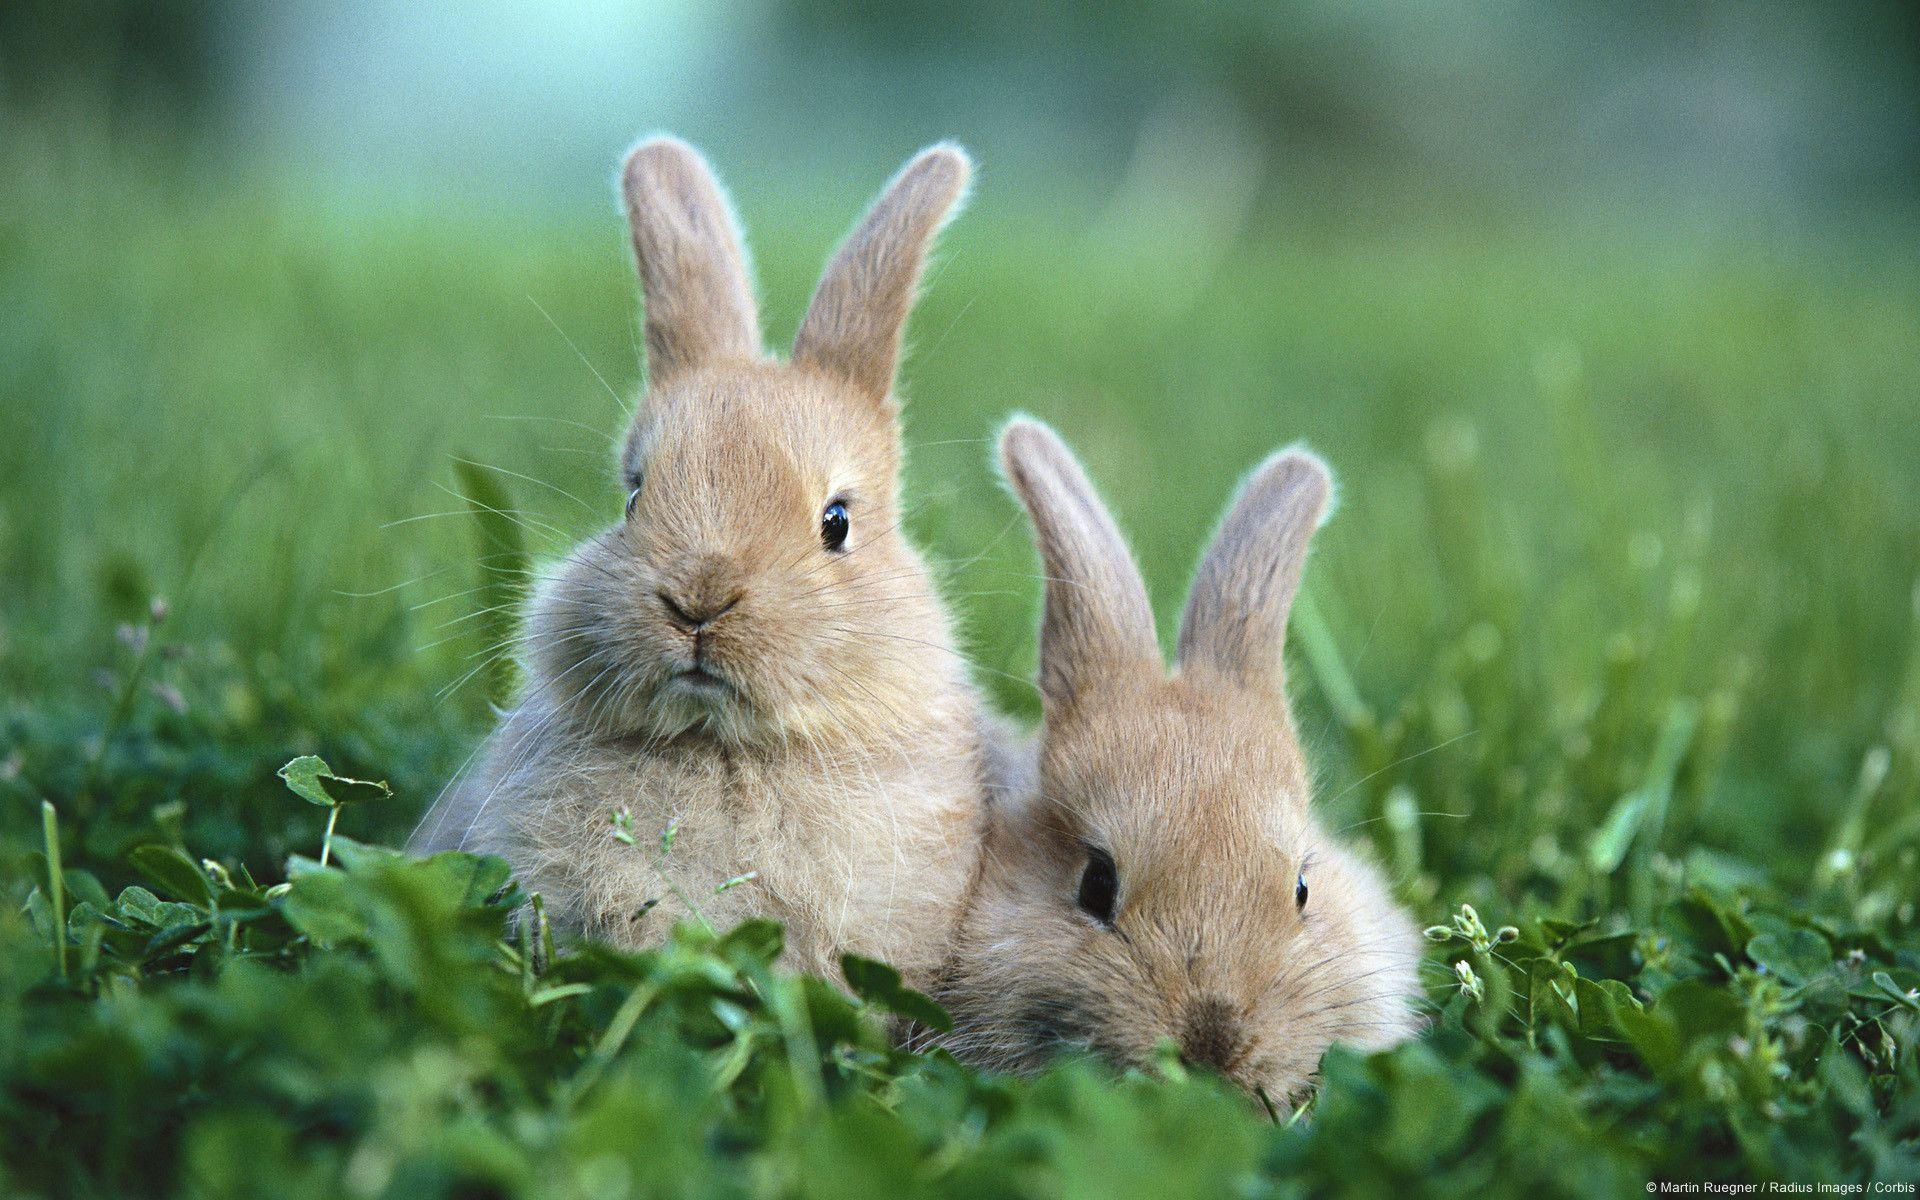 Wallpaper For > Wallpaper Of Cute Rabbits